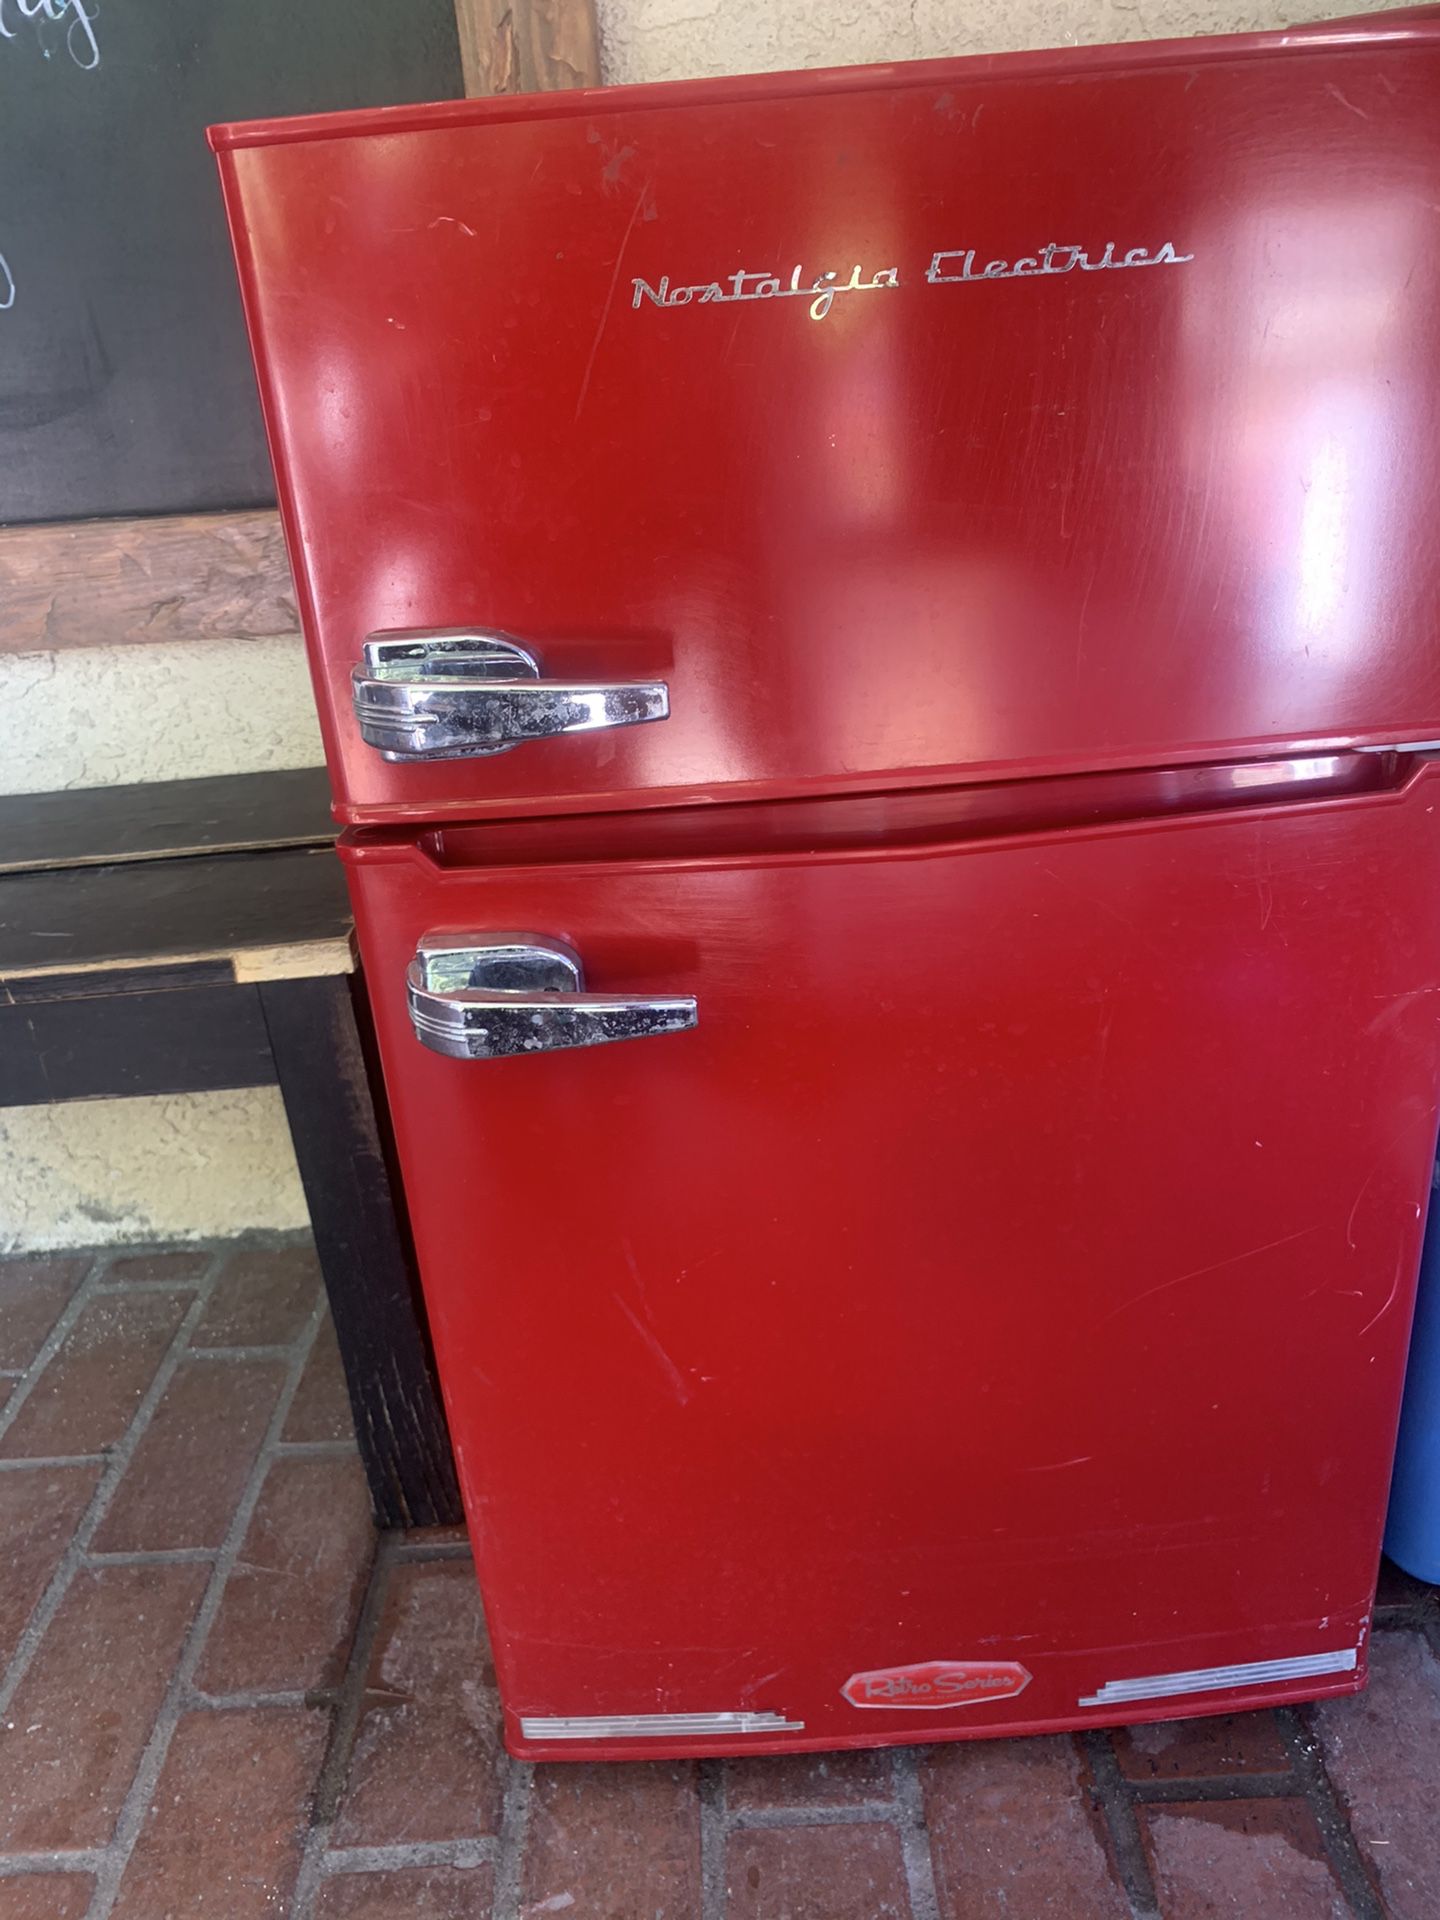 Red retro series nostalgia electrics mini fridge refrigerator turns on but doesn’t cool